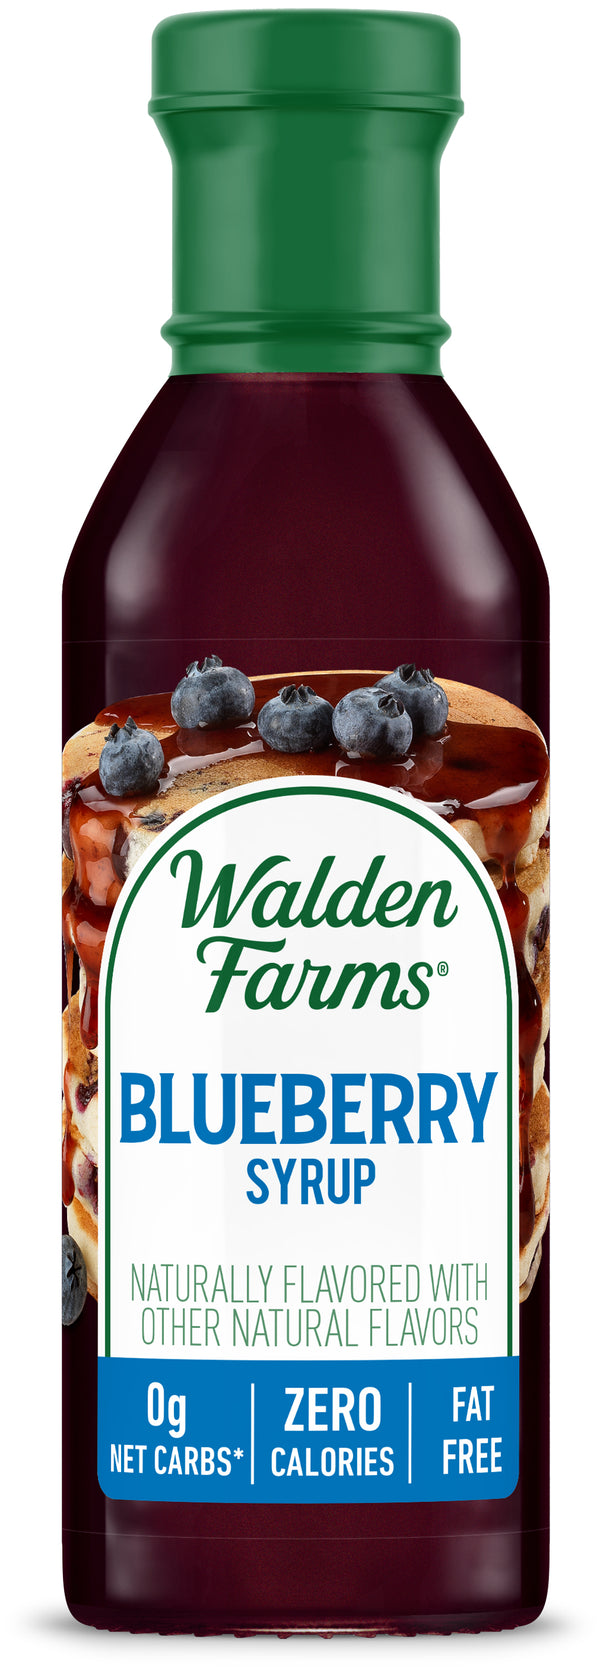 #Flavor_Blueberry #Size_1 bottle